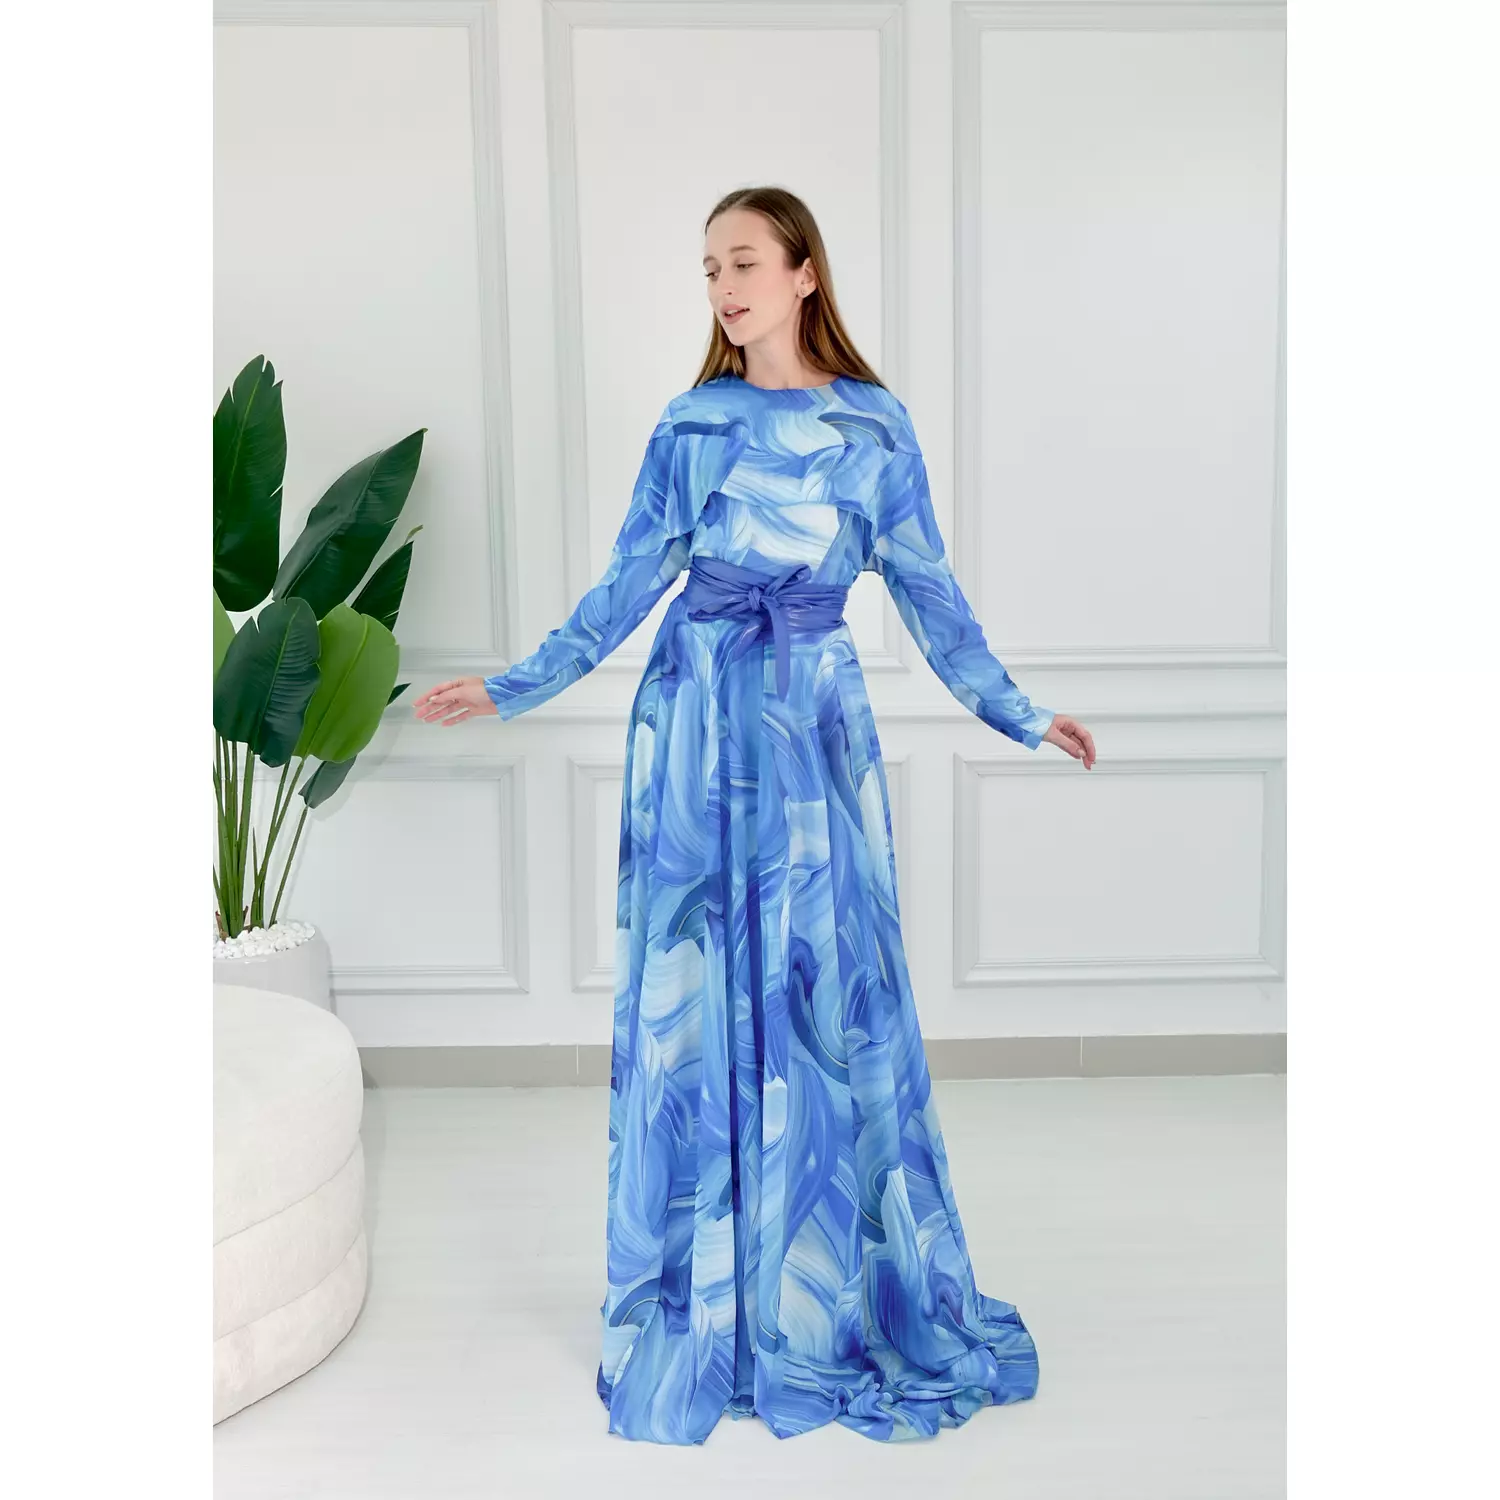 Mermaid Blue Dress 0